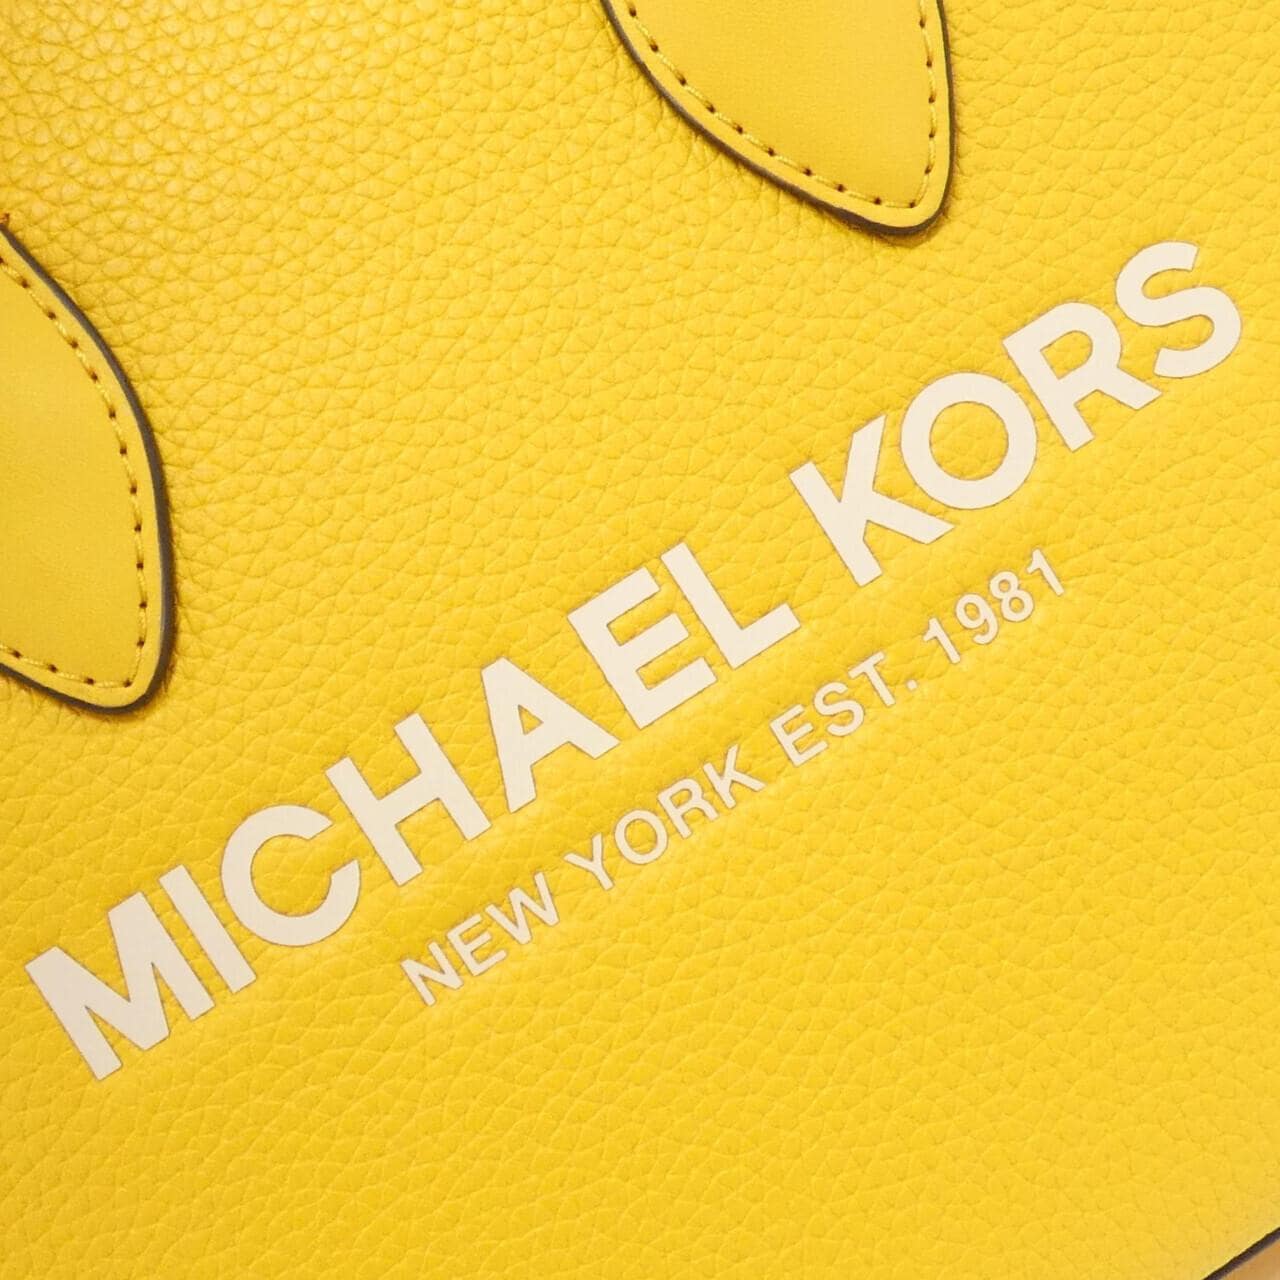 [BRAND NEW] Michael MICHAEL KORS MIRELLA 35S2G7ZC5L Bag